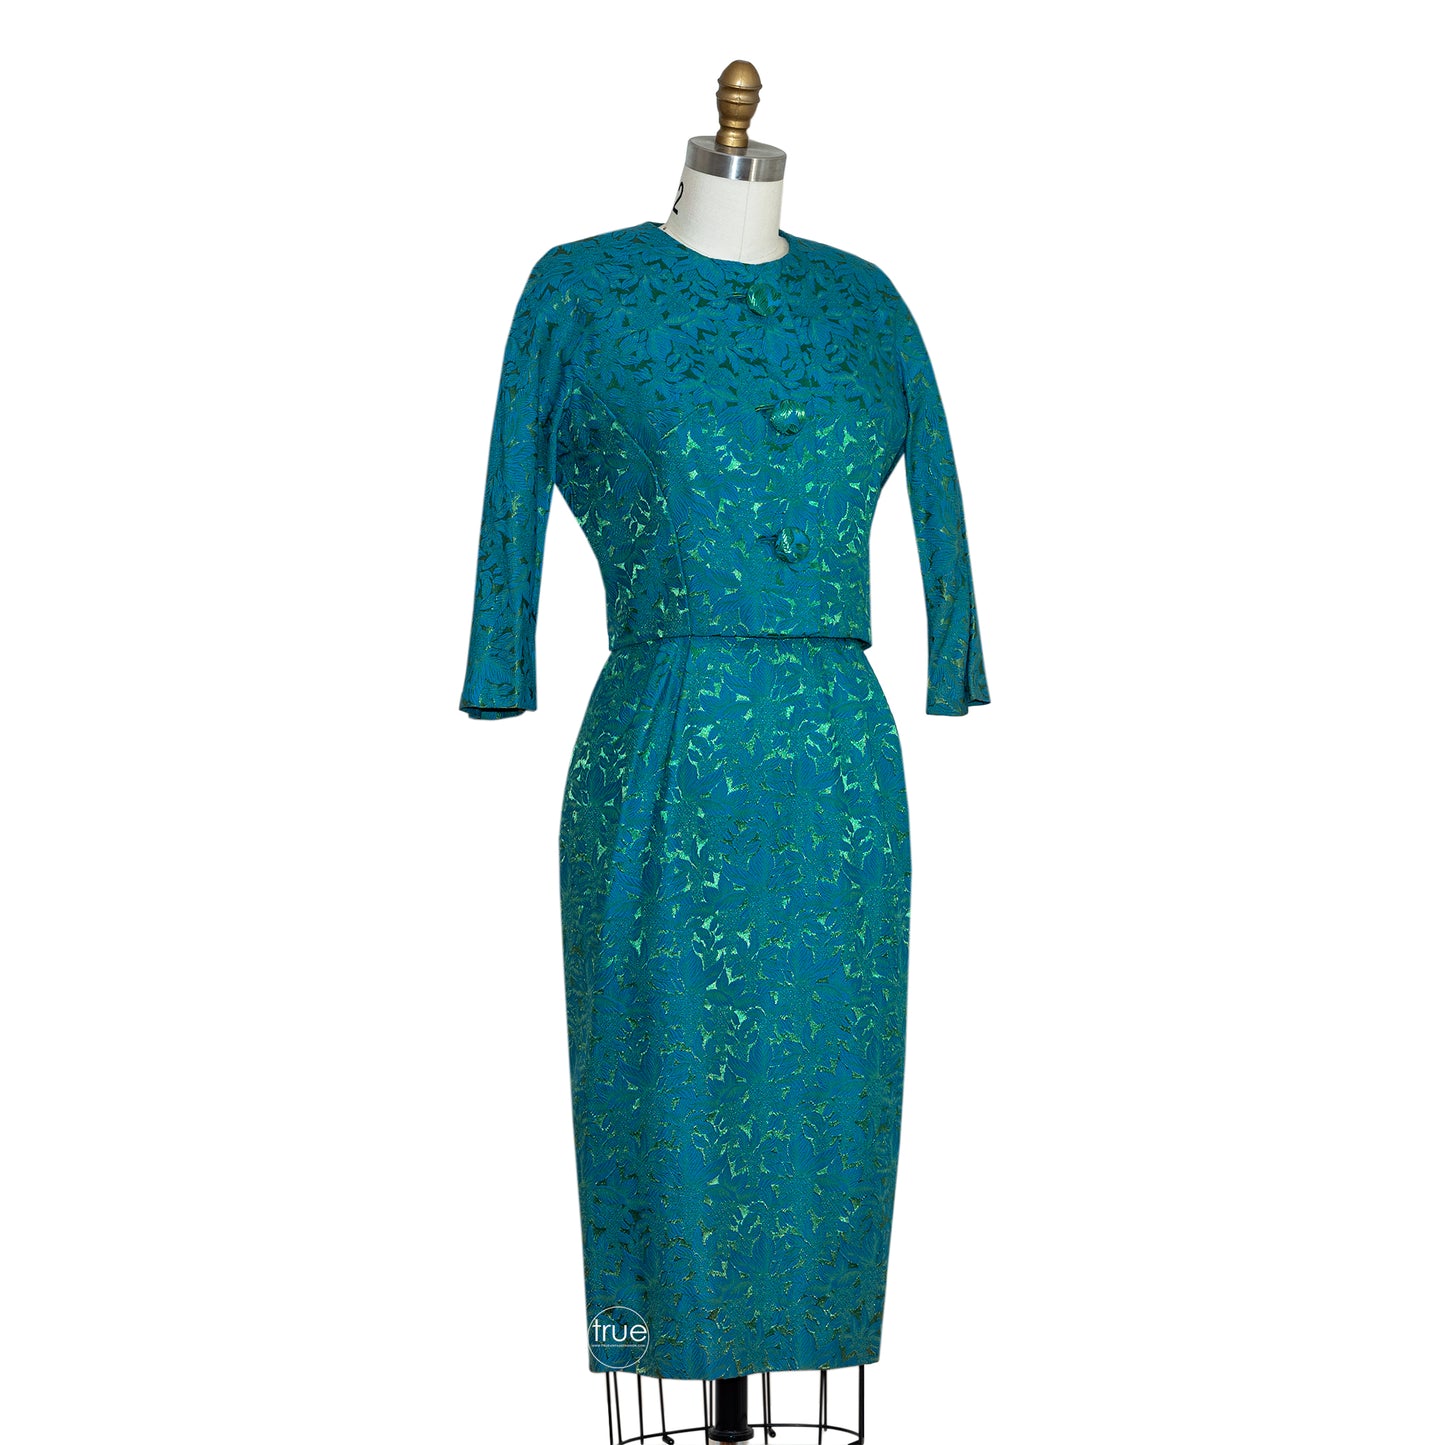 vintage 1950's dress ...lovely sapphire blue & emerald green brocade dress and jacket